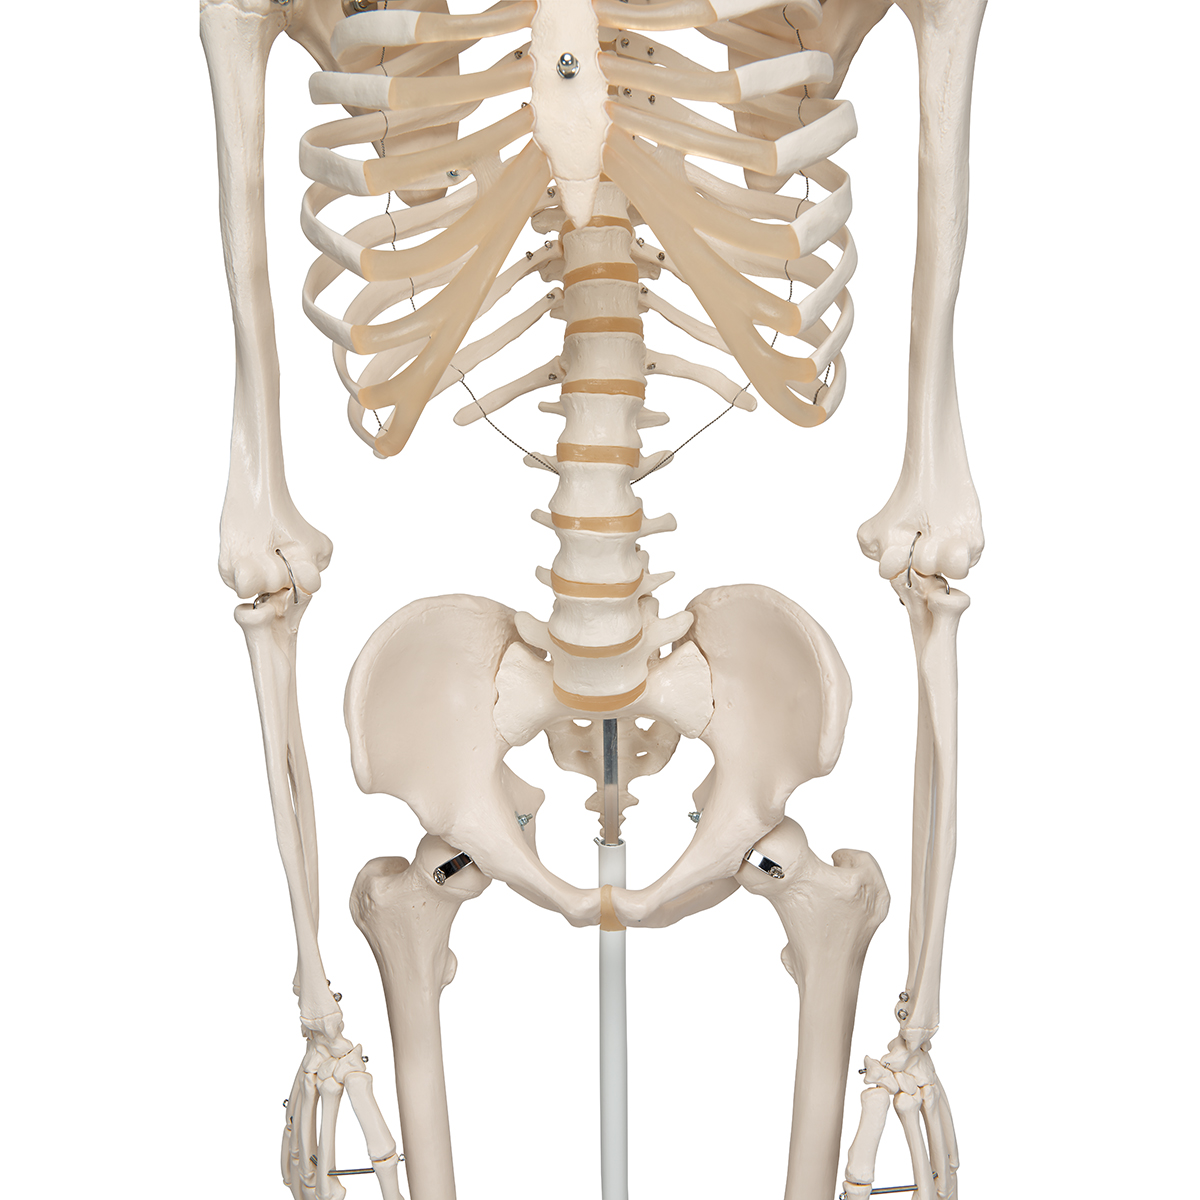 Human Skeleton Model Stan 3b Smart Anatomy 1020171 3b Scientific A10 Human Skeleton Models Full Size Quality Skeleton Teaching Models